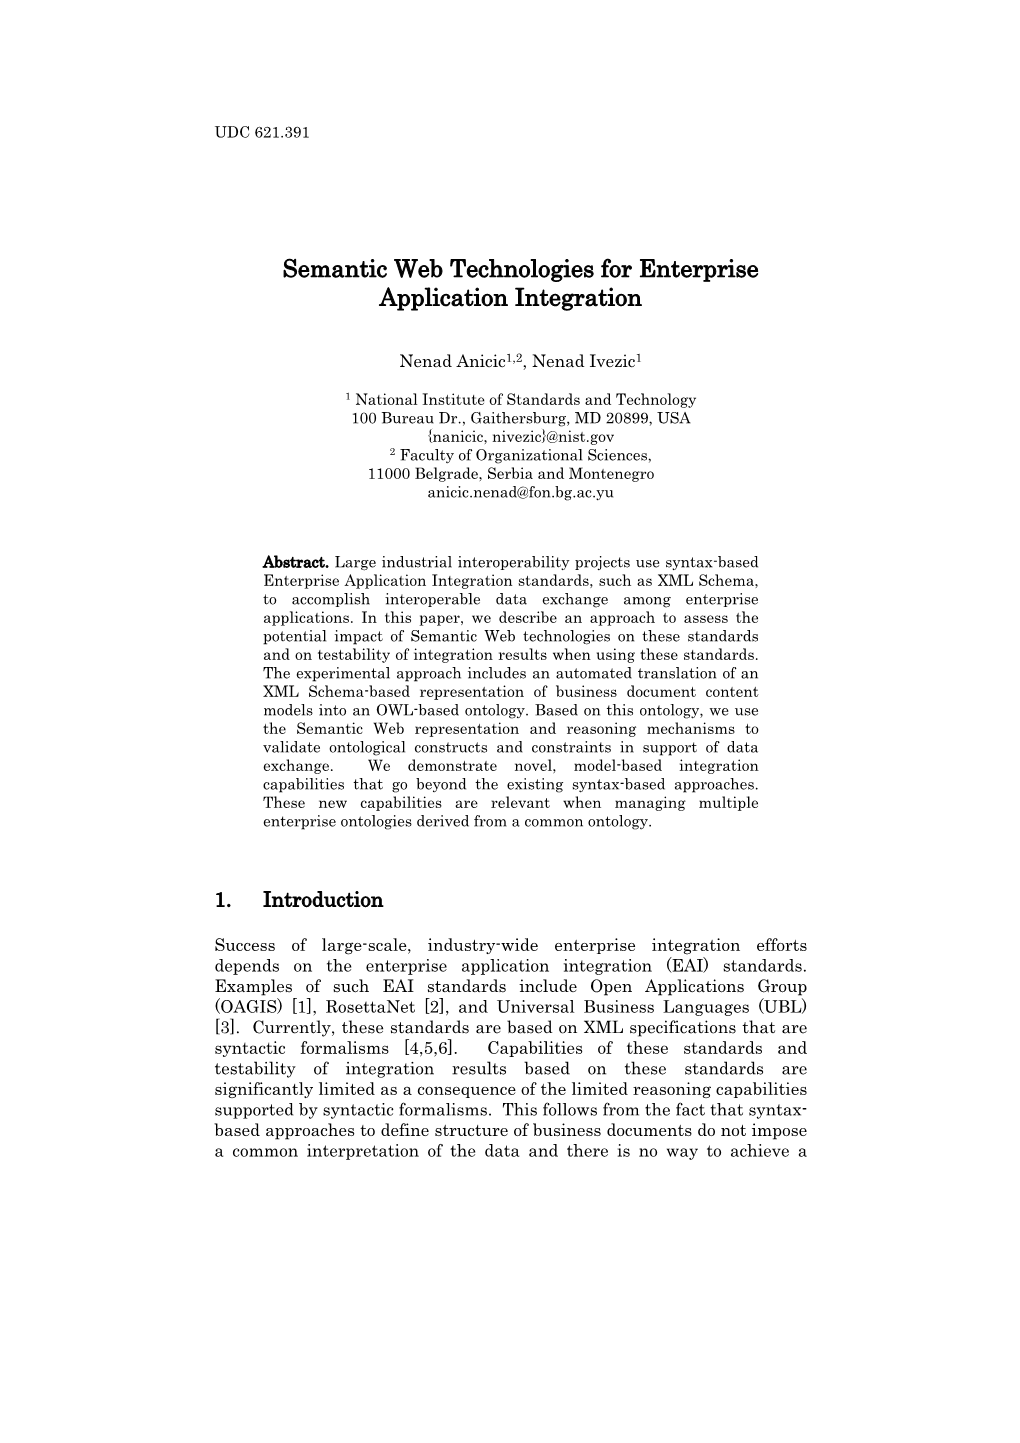 Semantic Web Technologies for Enterprise Application Integration